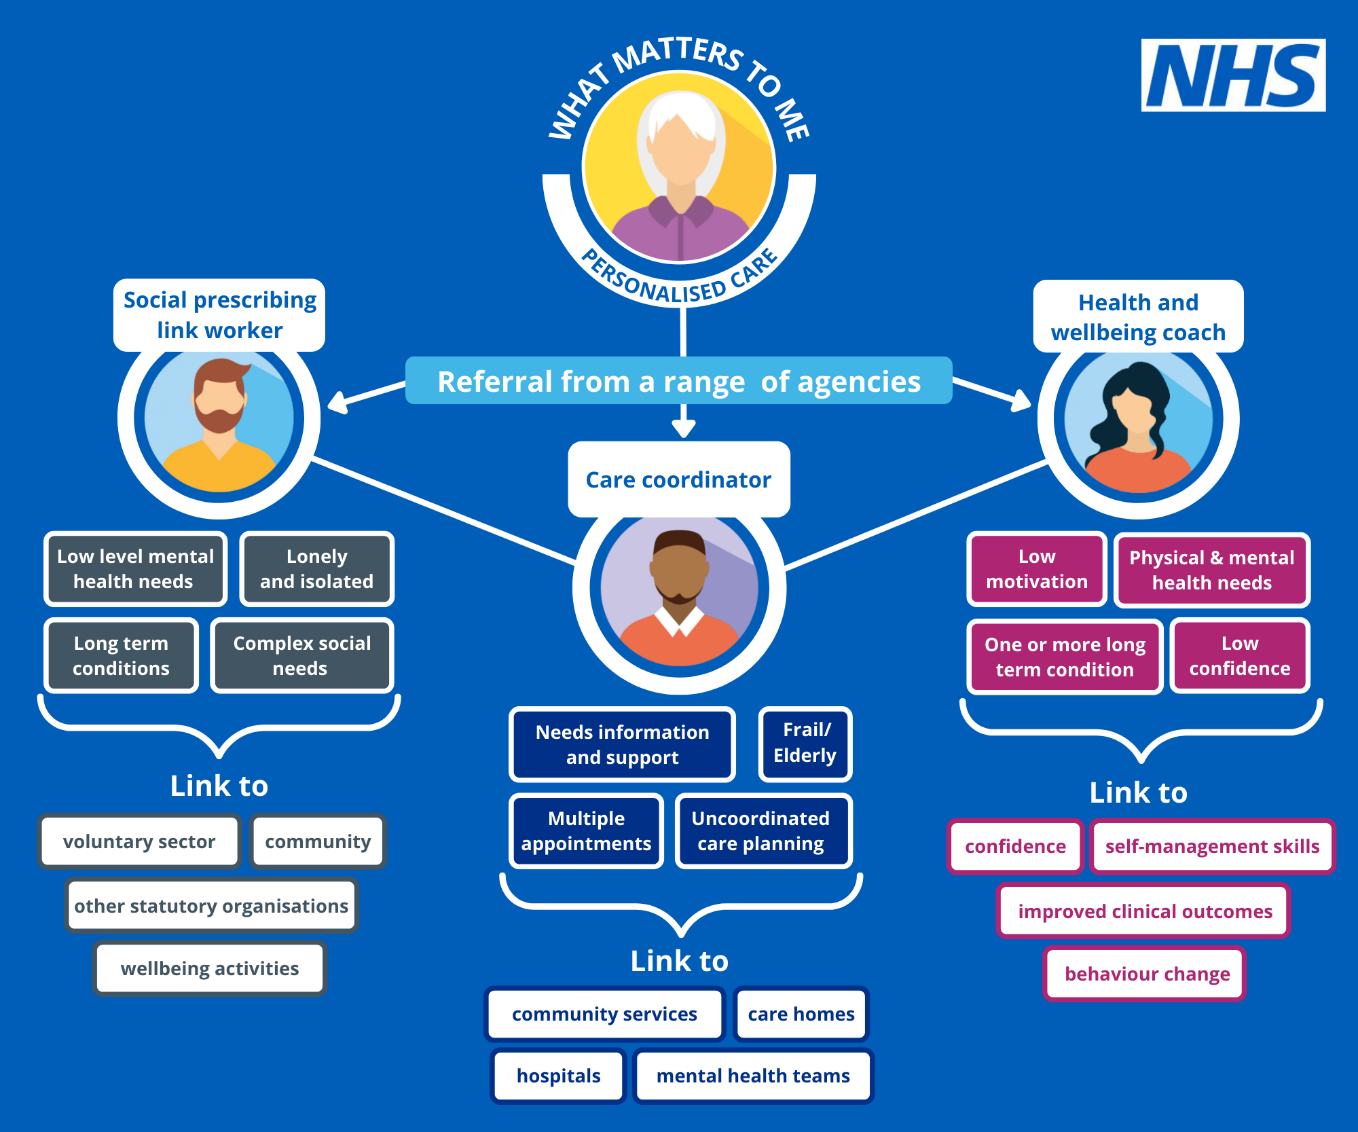 Diagram 2 – Personalised care roles in primary care

